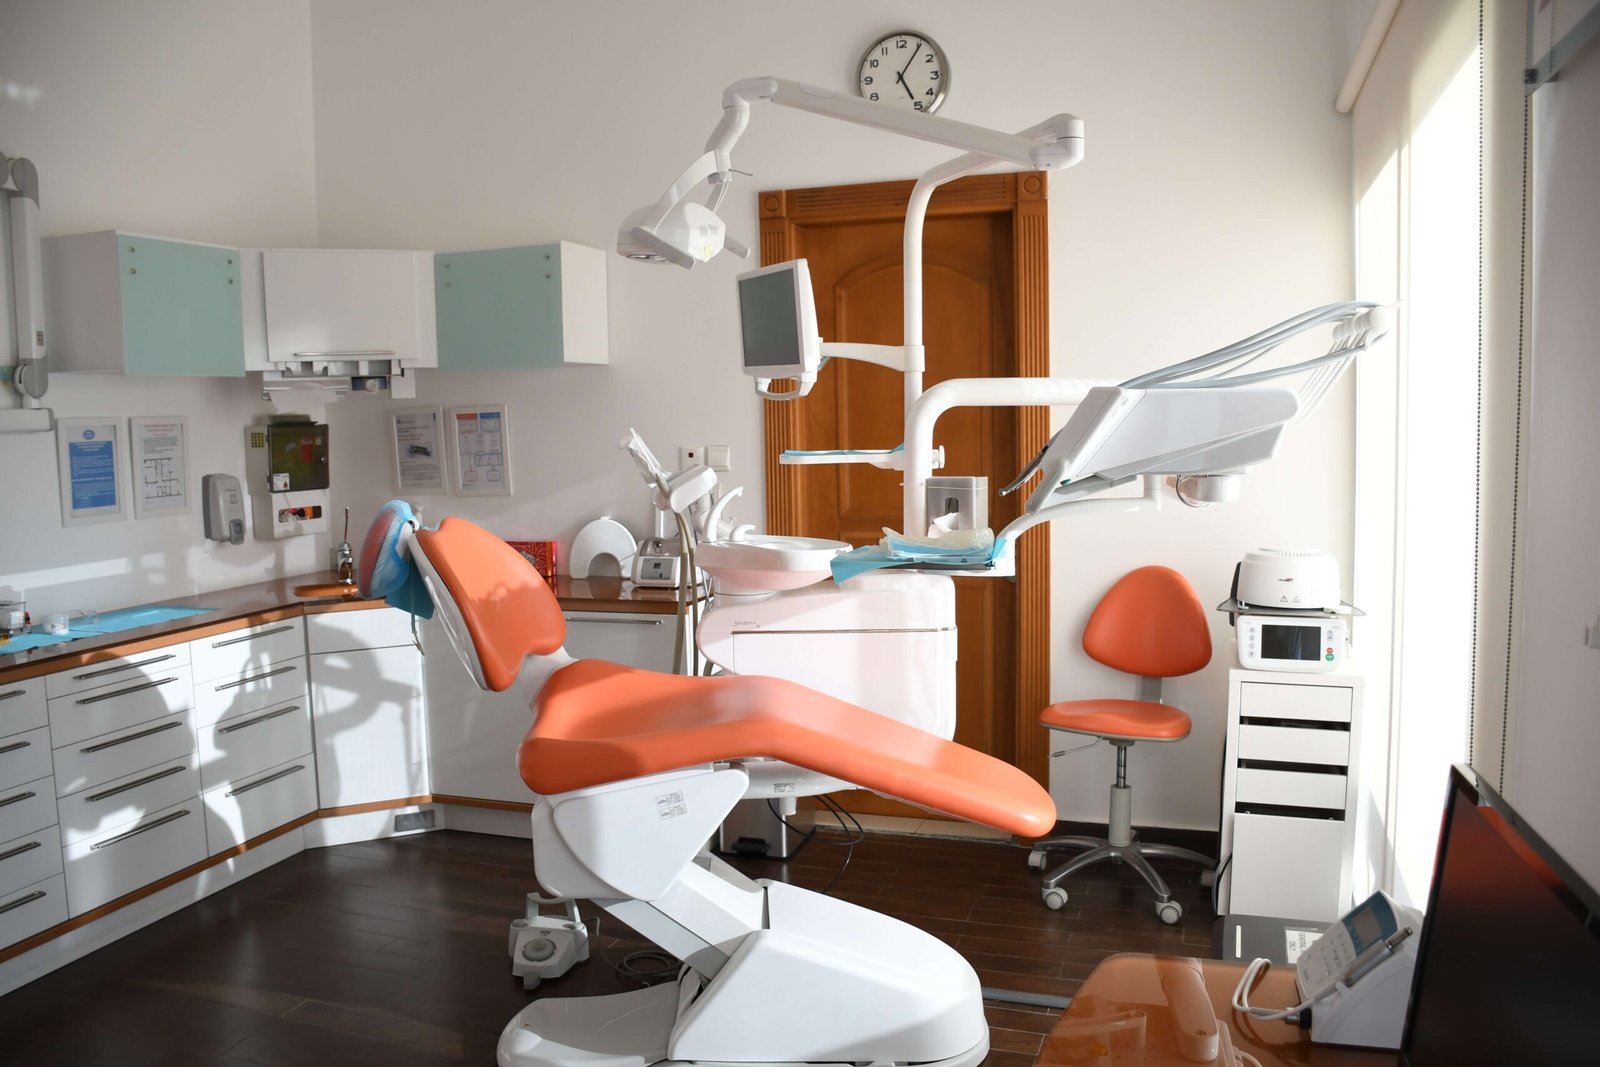 advanced dental clinic setups